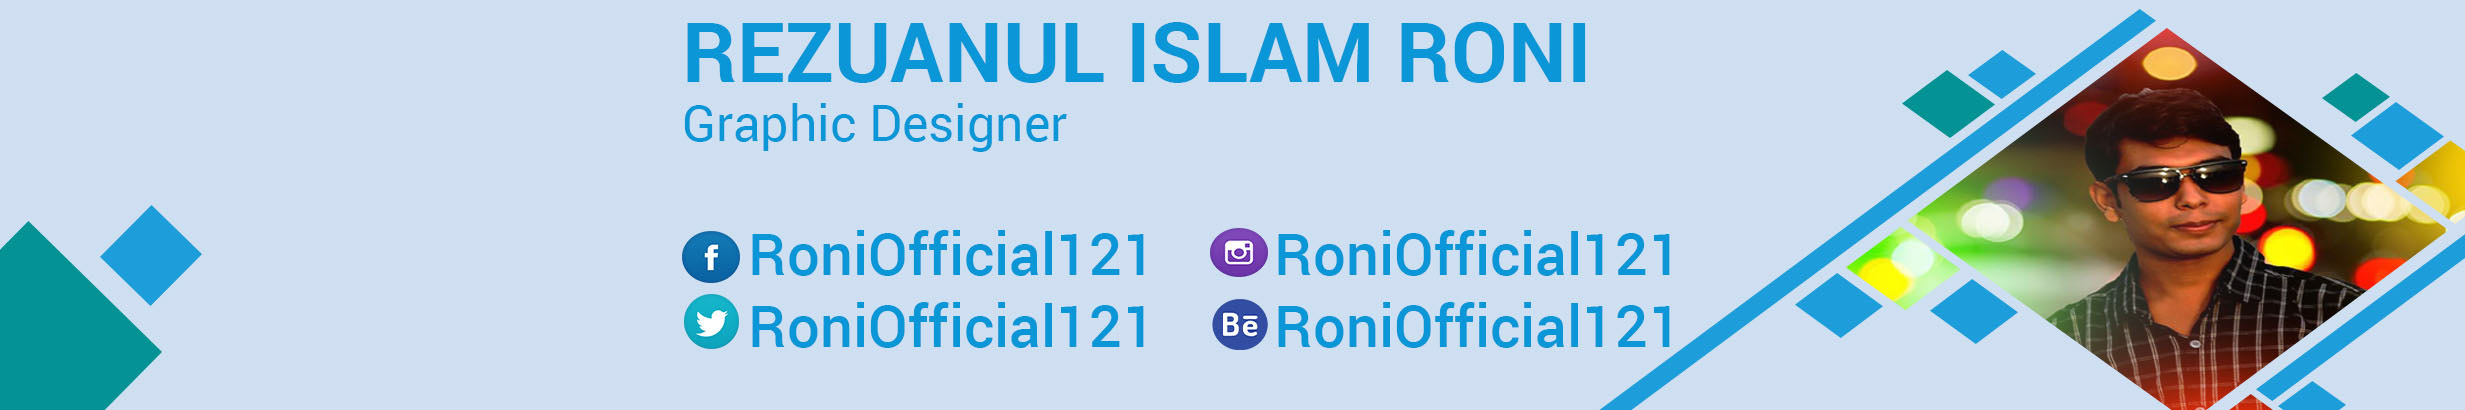 Rezuanul islam roni 님의 프로필 배너